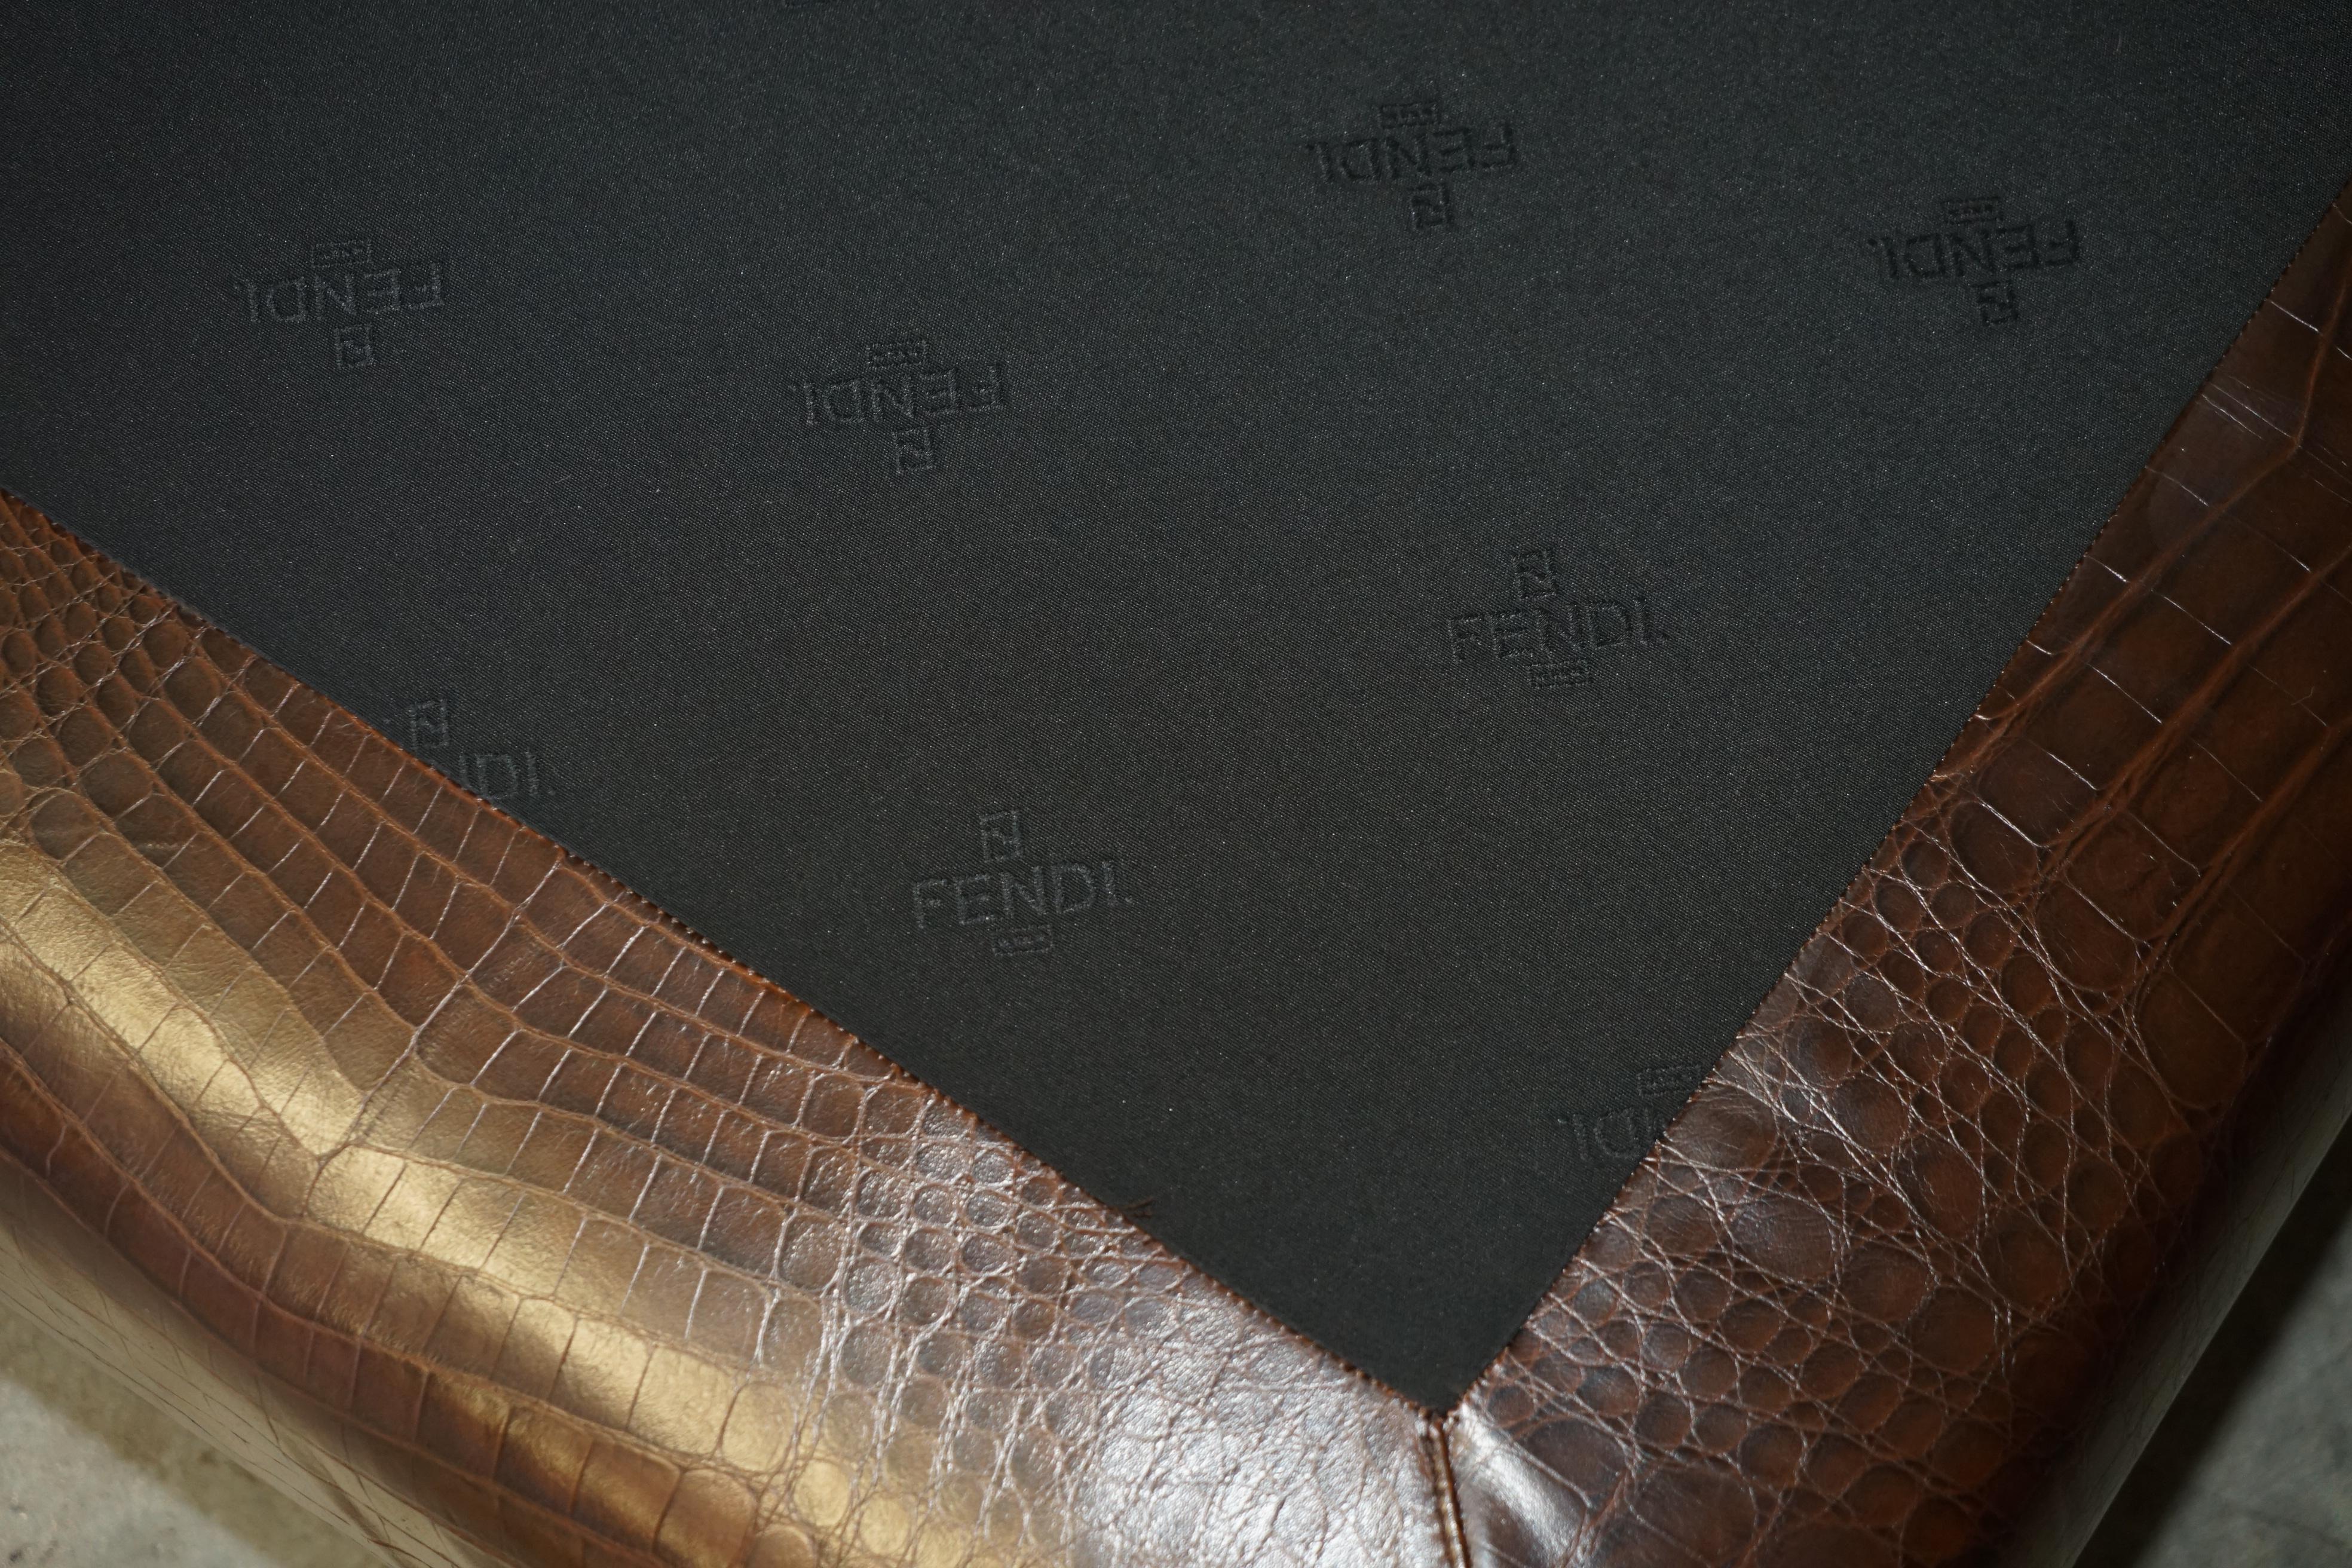 Leather EXQUISITE FENDI CASA CROCODiLE ALLIGATOR LEATHER PATINA EMPEROR BED For Sale